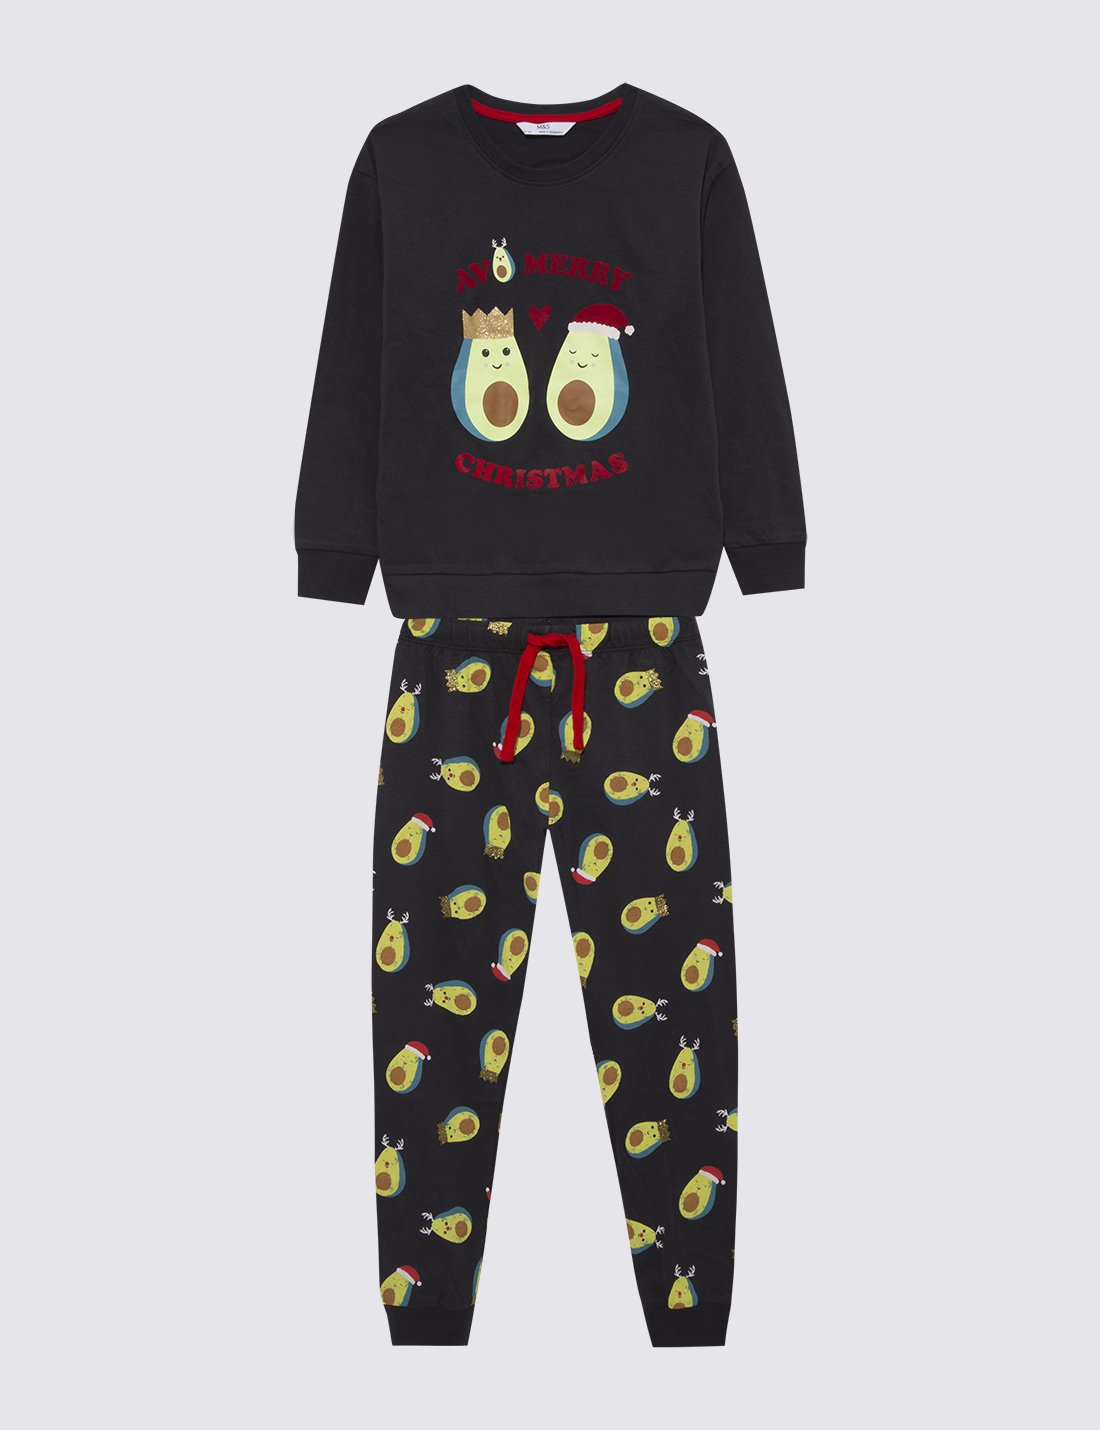 Saf Pamuklu Yılbaşı Temalı Pijama Takımı